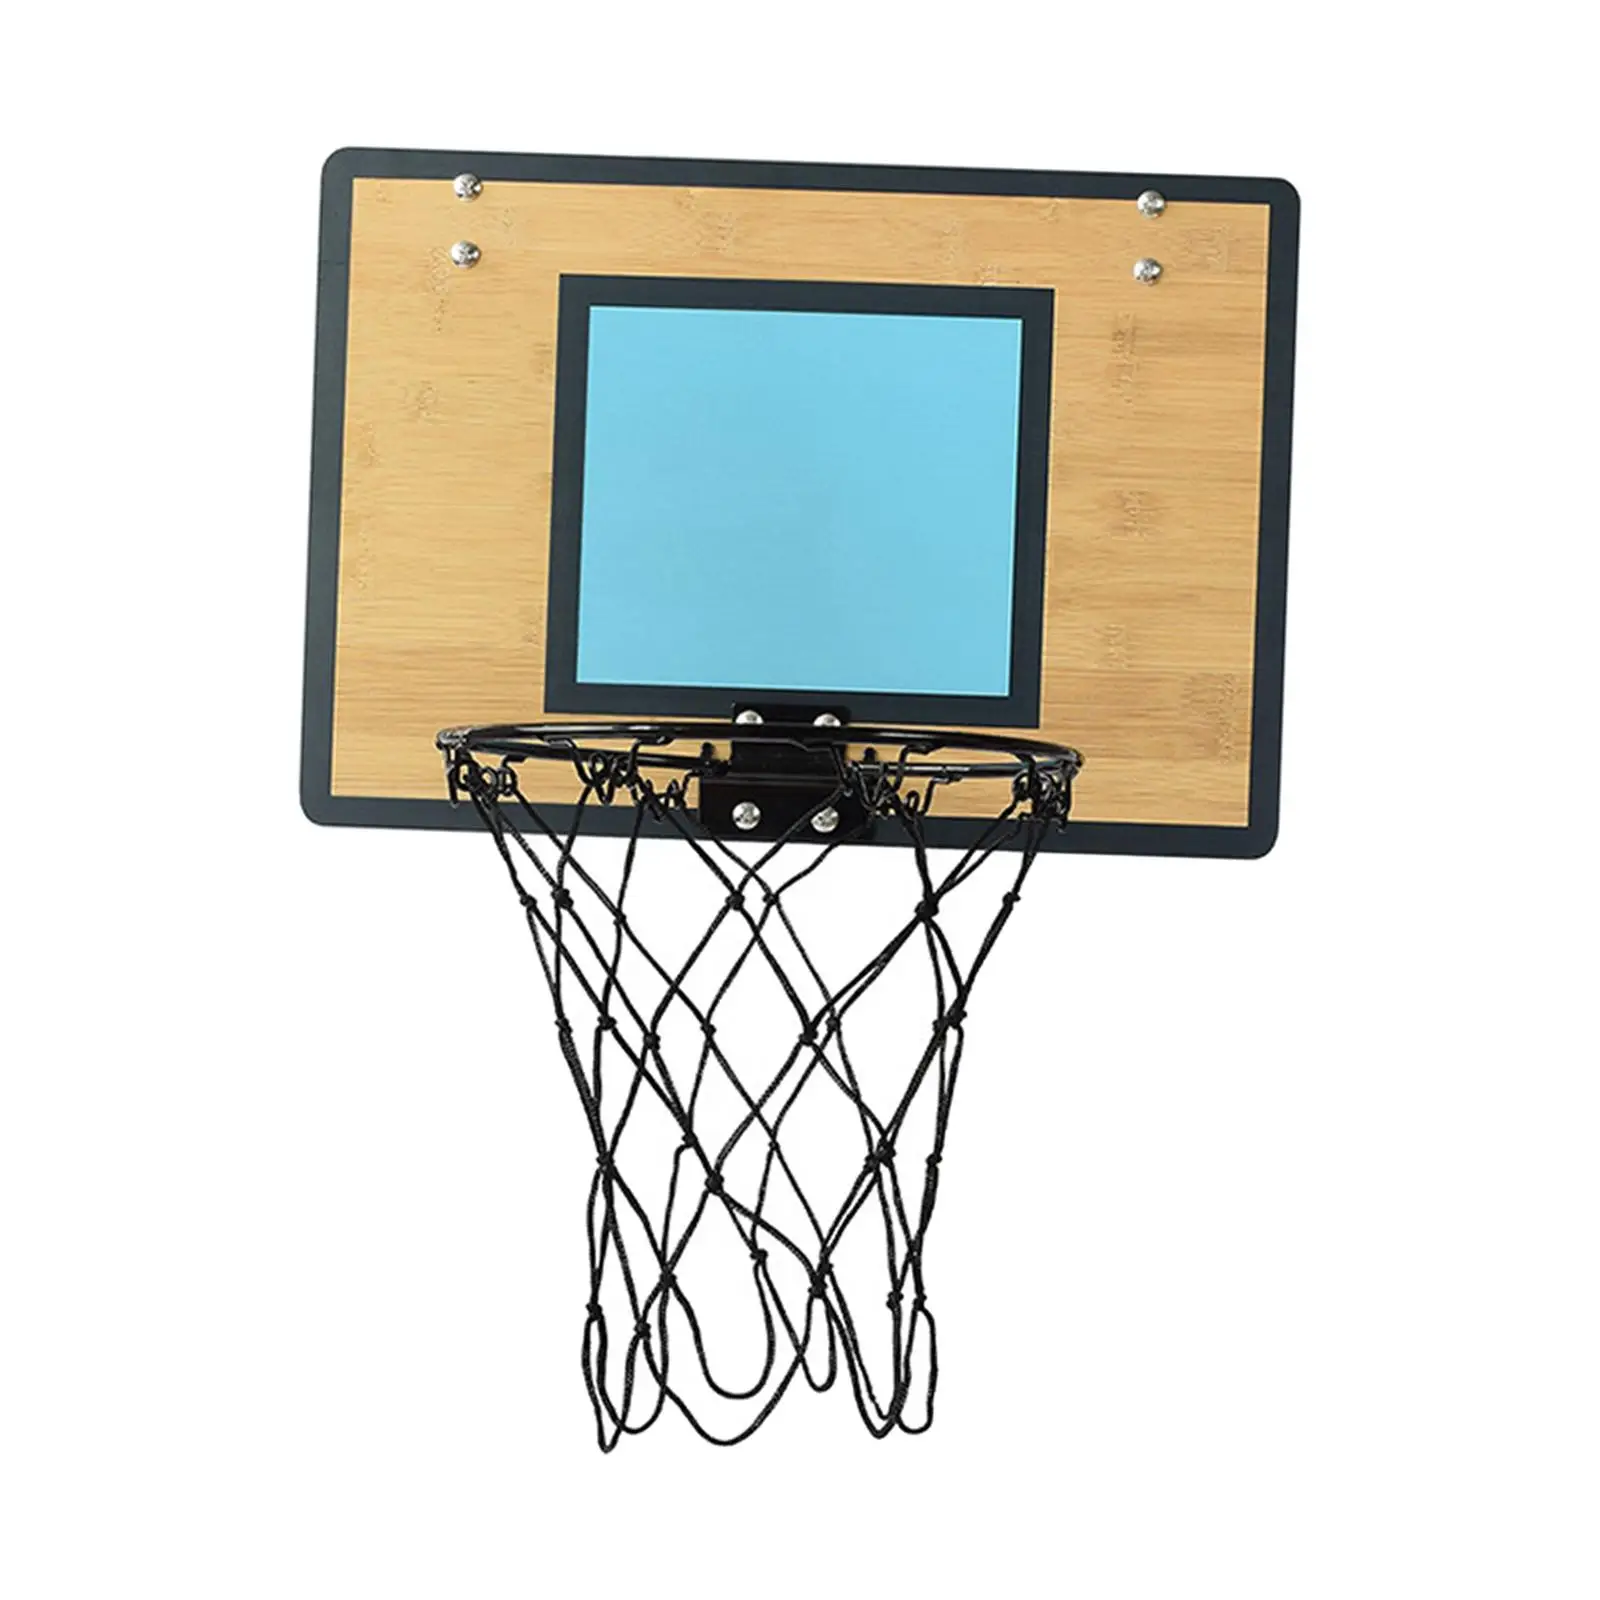 Mini Basketball Hoop Child Basketball Game Toy for Dunking Garden Backyard